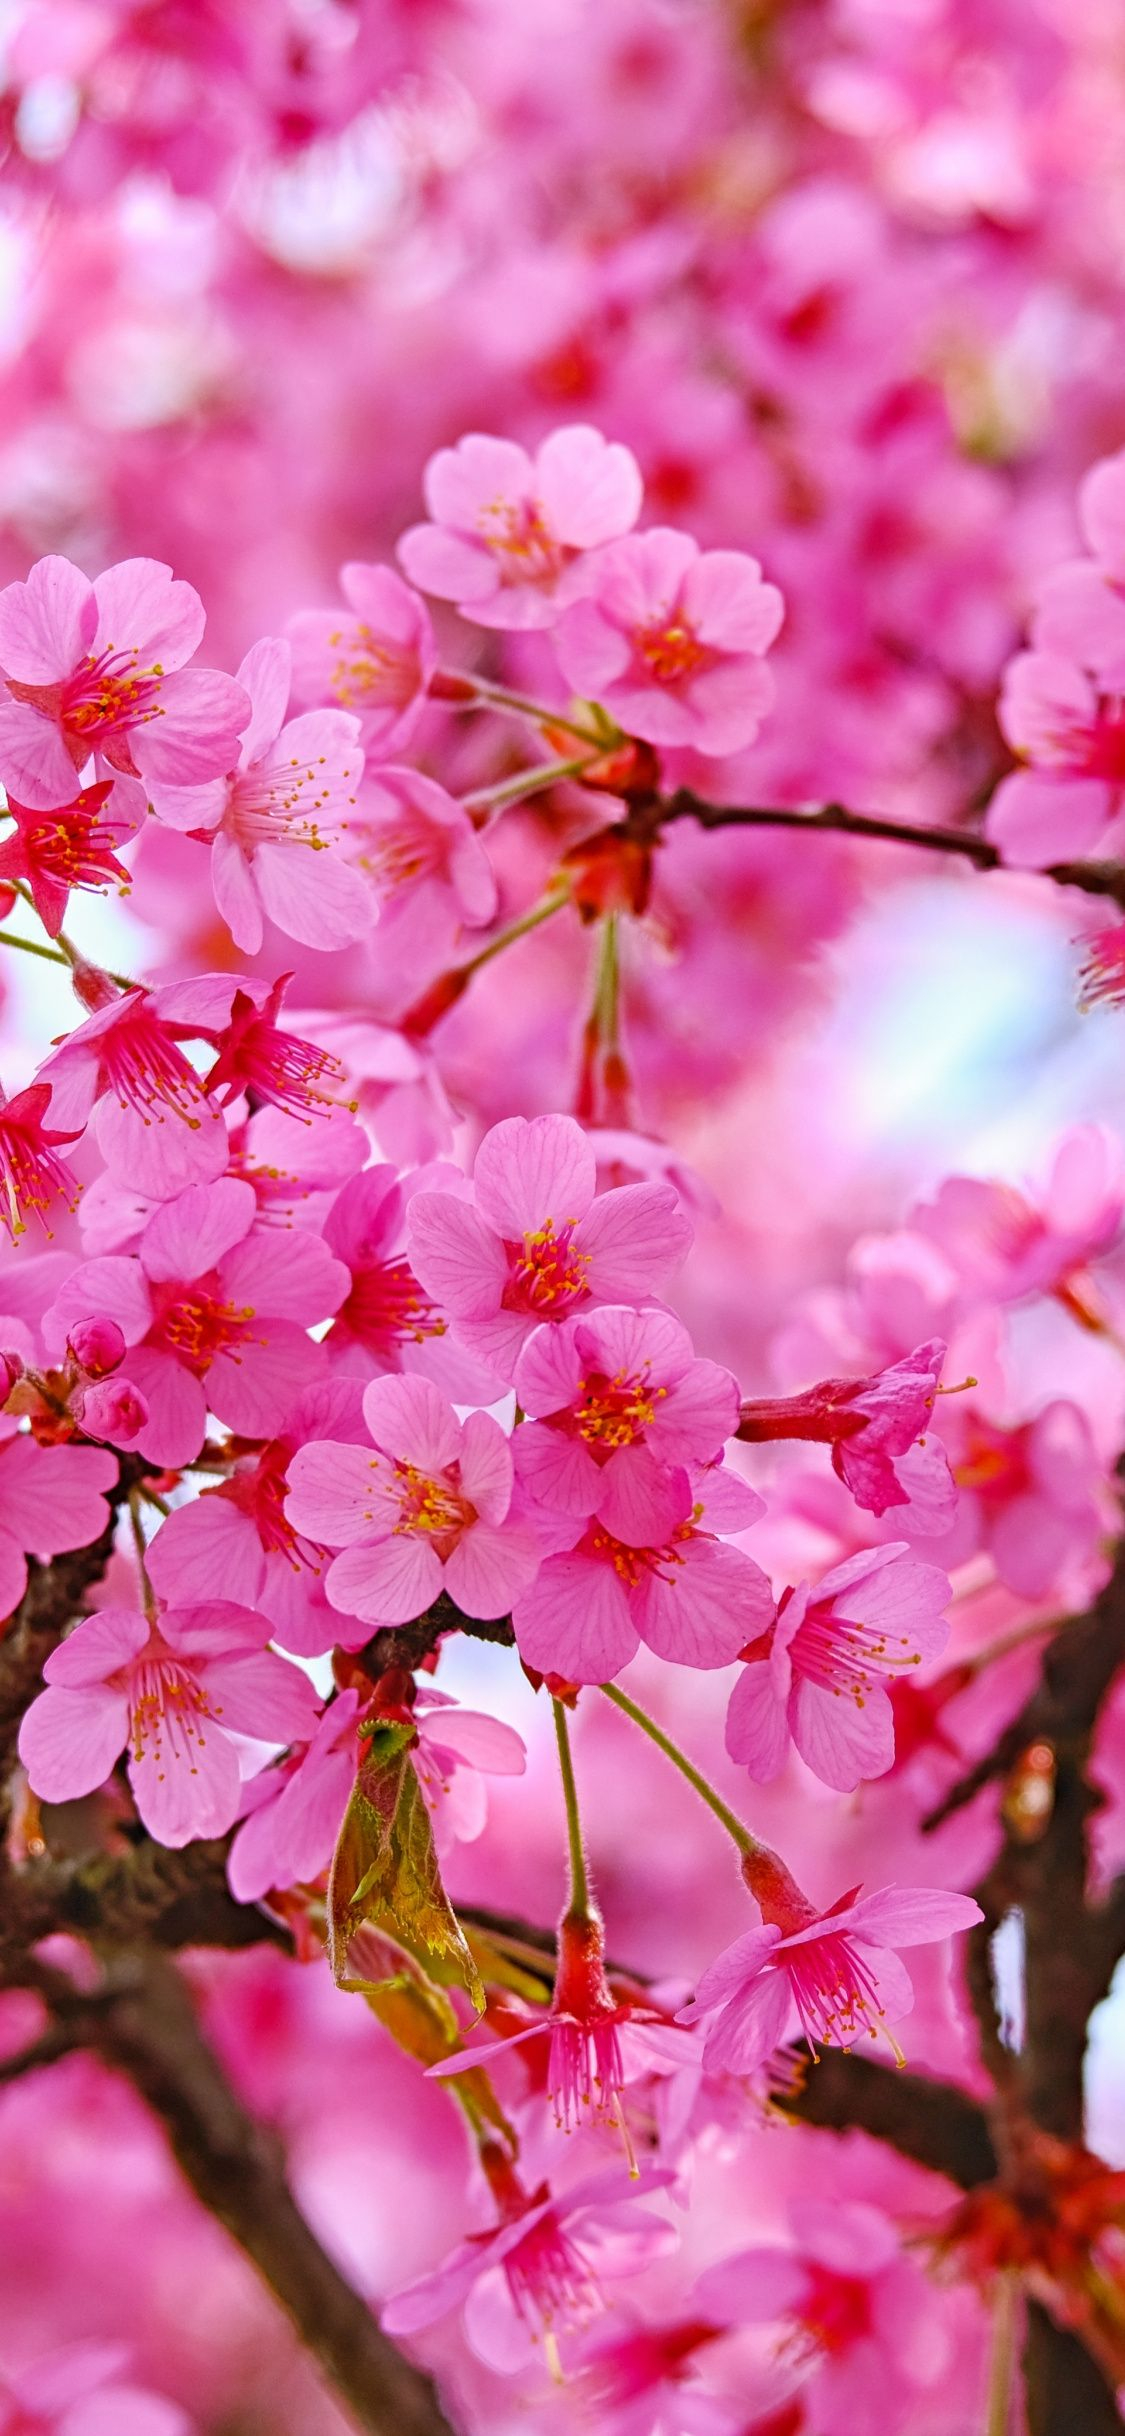 1125x2436 Cherry blossom, pink flowers, nature wallpaper | Pink flowers, Cherry blossom wallpaper, Pink flowers wallpaper